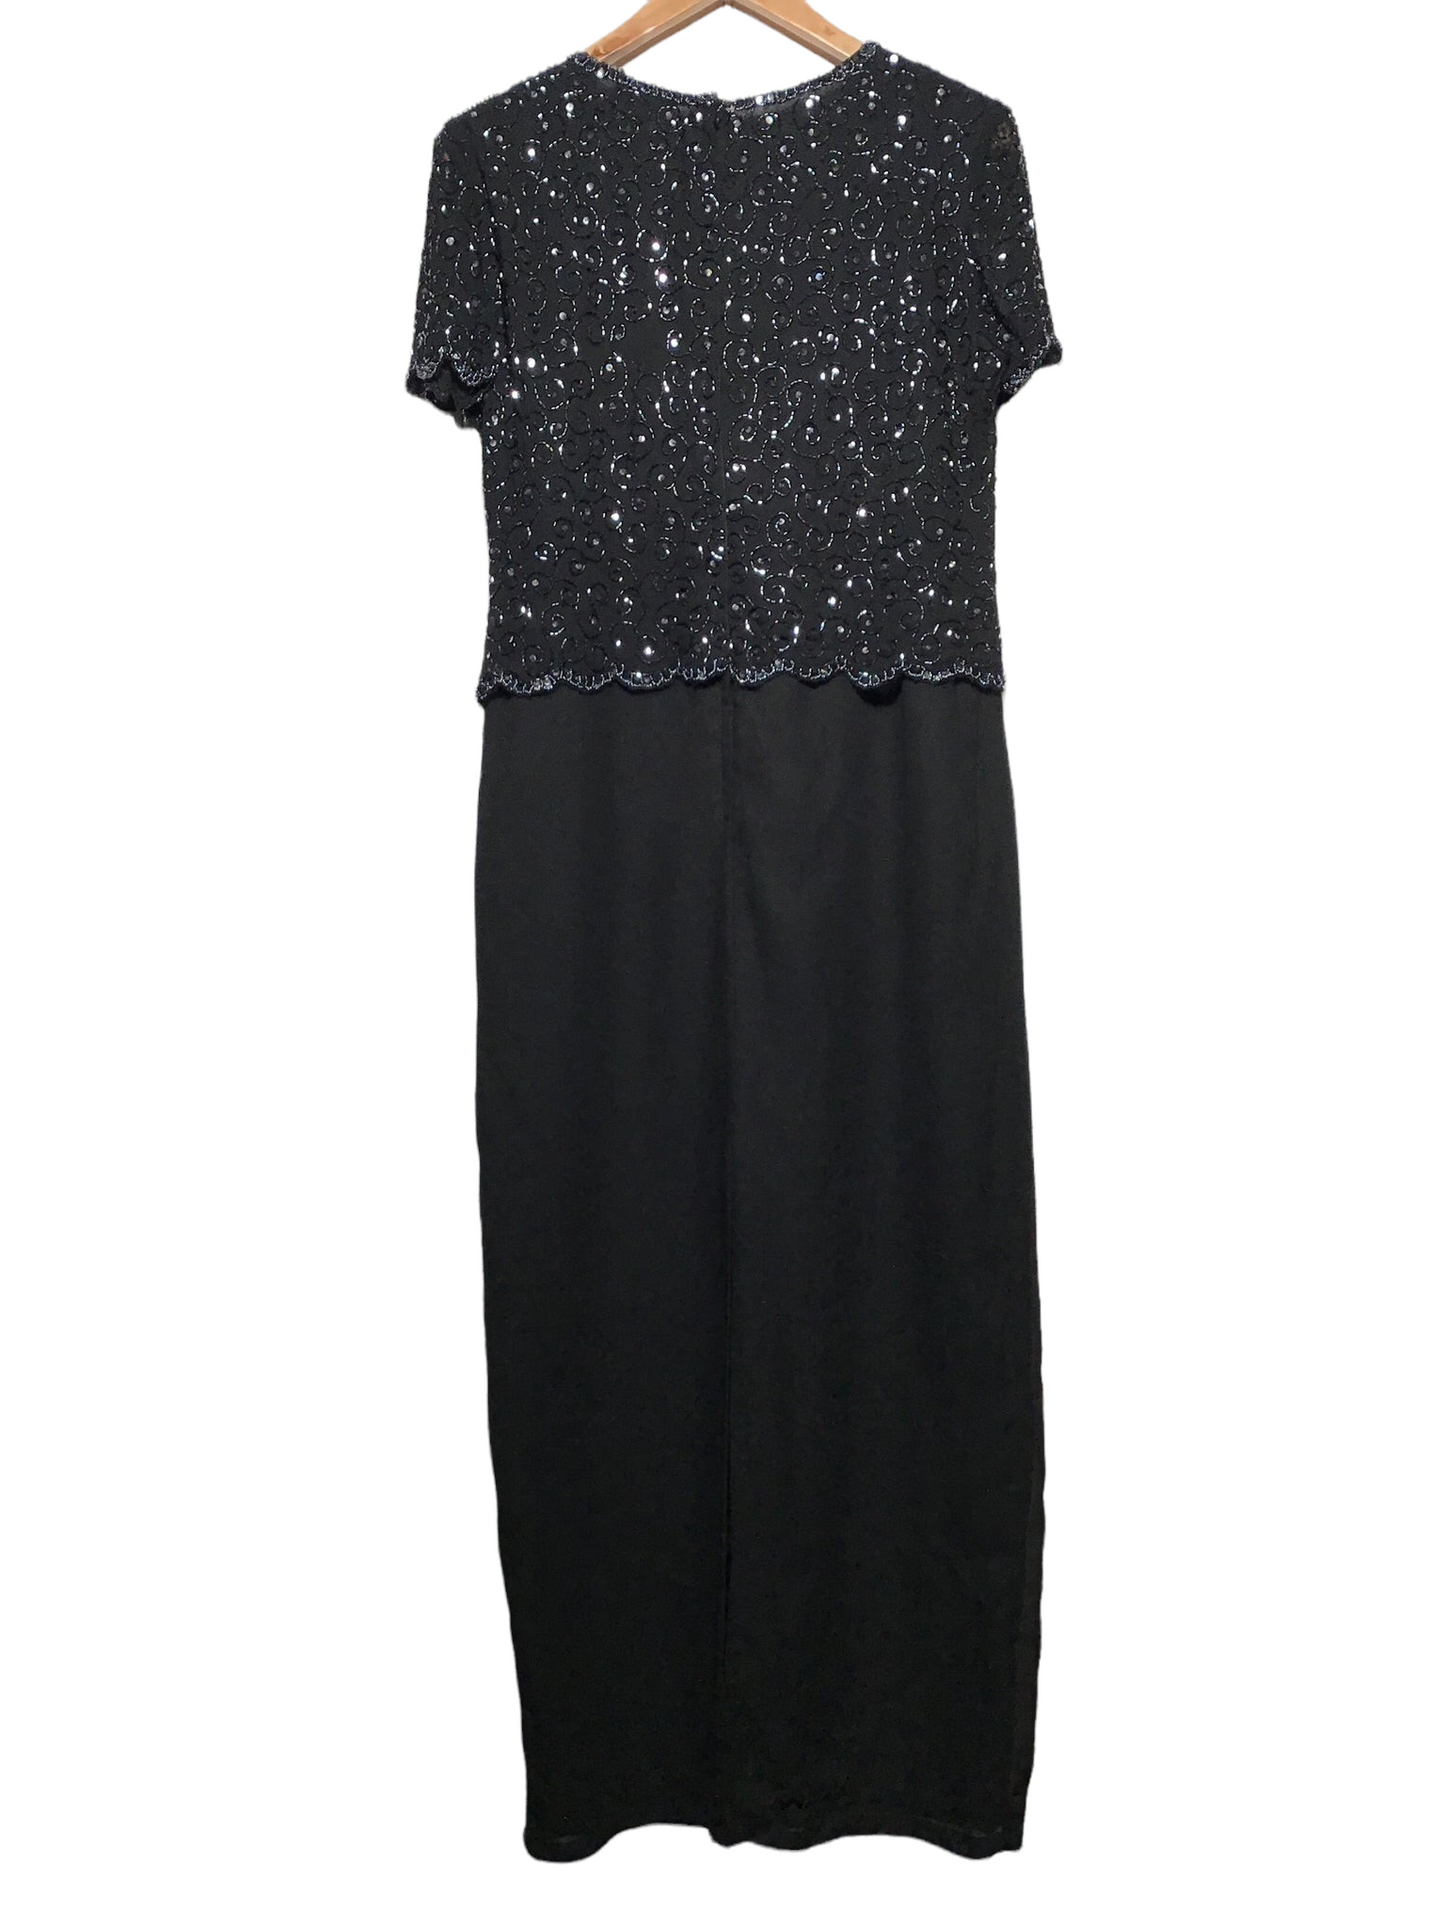 J Kara Beaded Evening Dress (Size M)